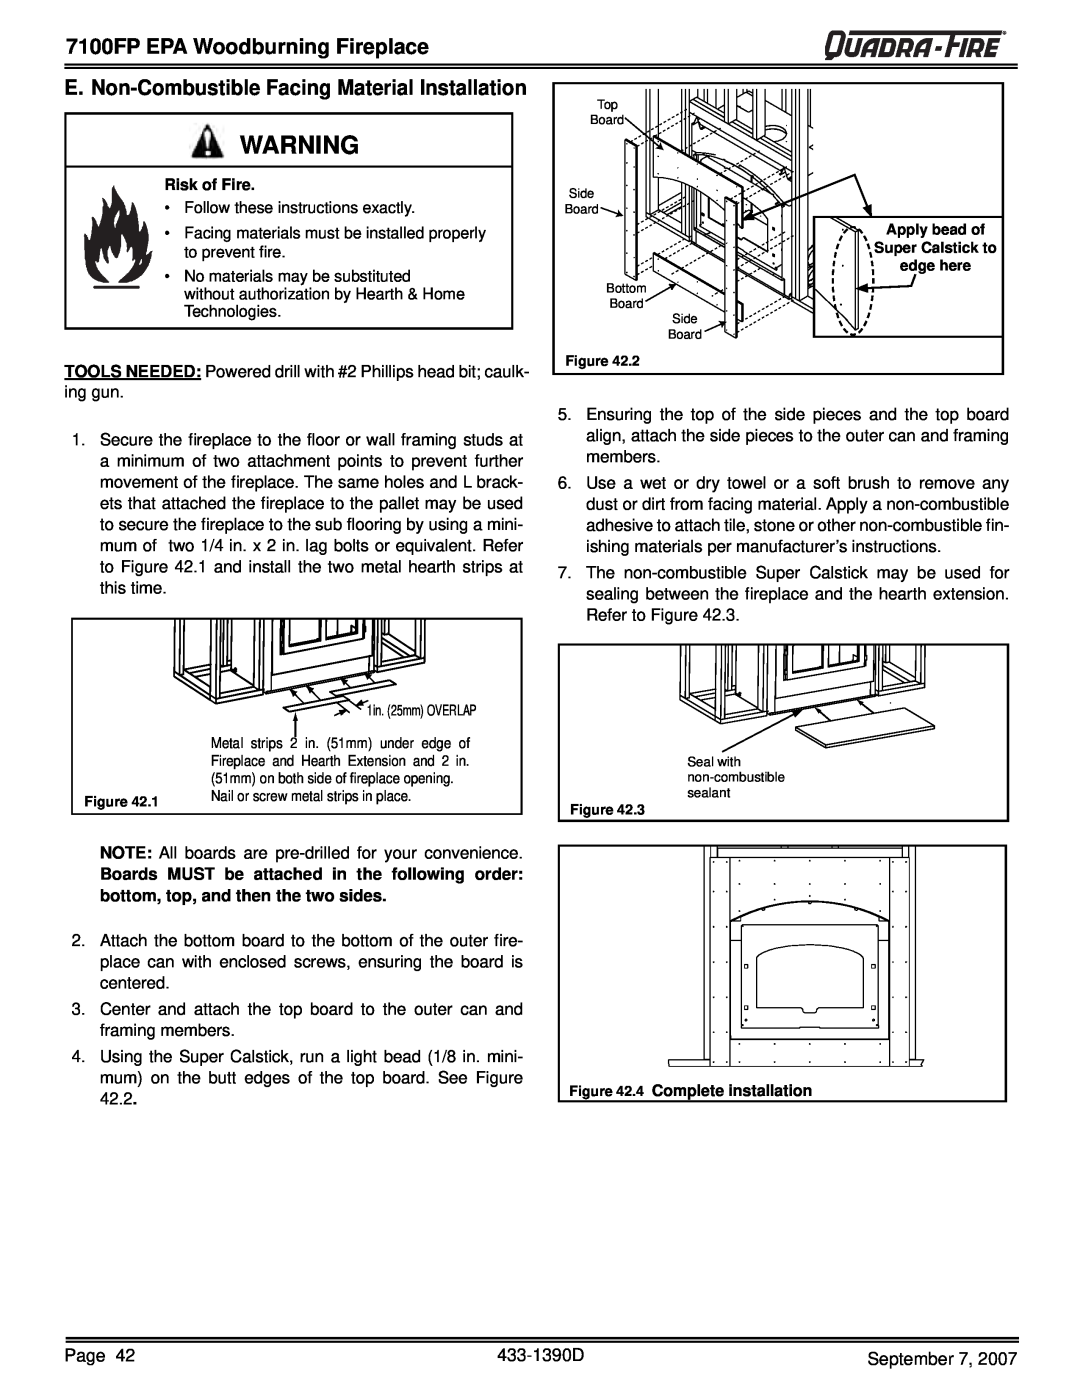 Quadra-Fire 7100FP-NL-B, 7100FP-BK-B 7100FP EPA Woodburning Fireplace, E. Non-CombustibleFacing Material Installation 